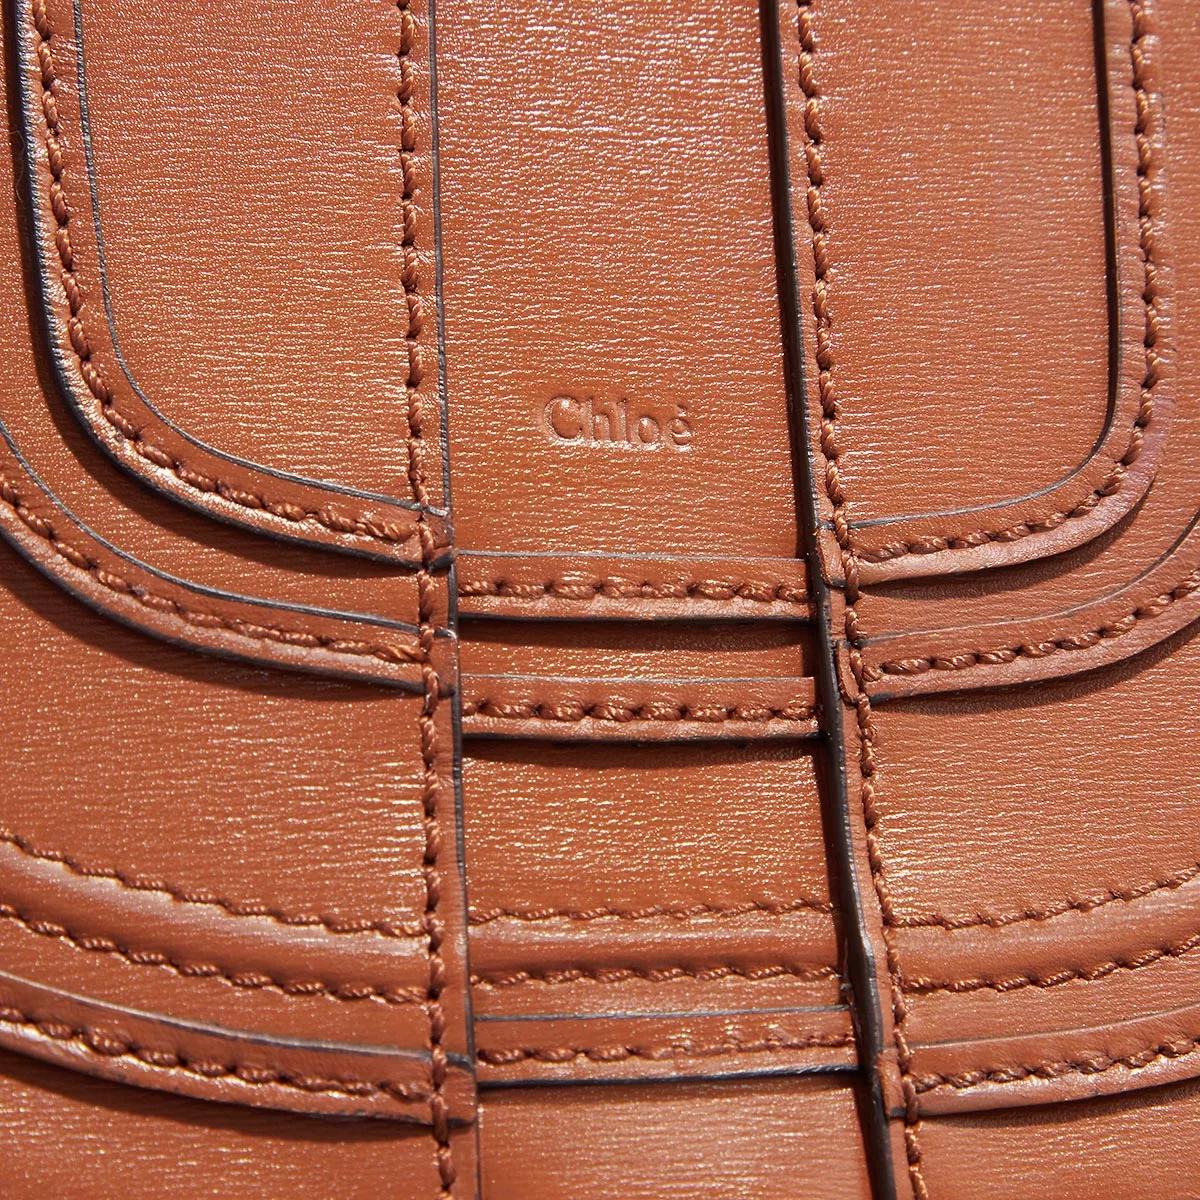 Chloé Marcie Small Leather Satchel Bag Brown